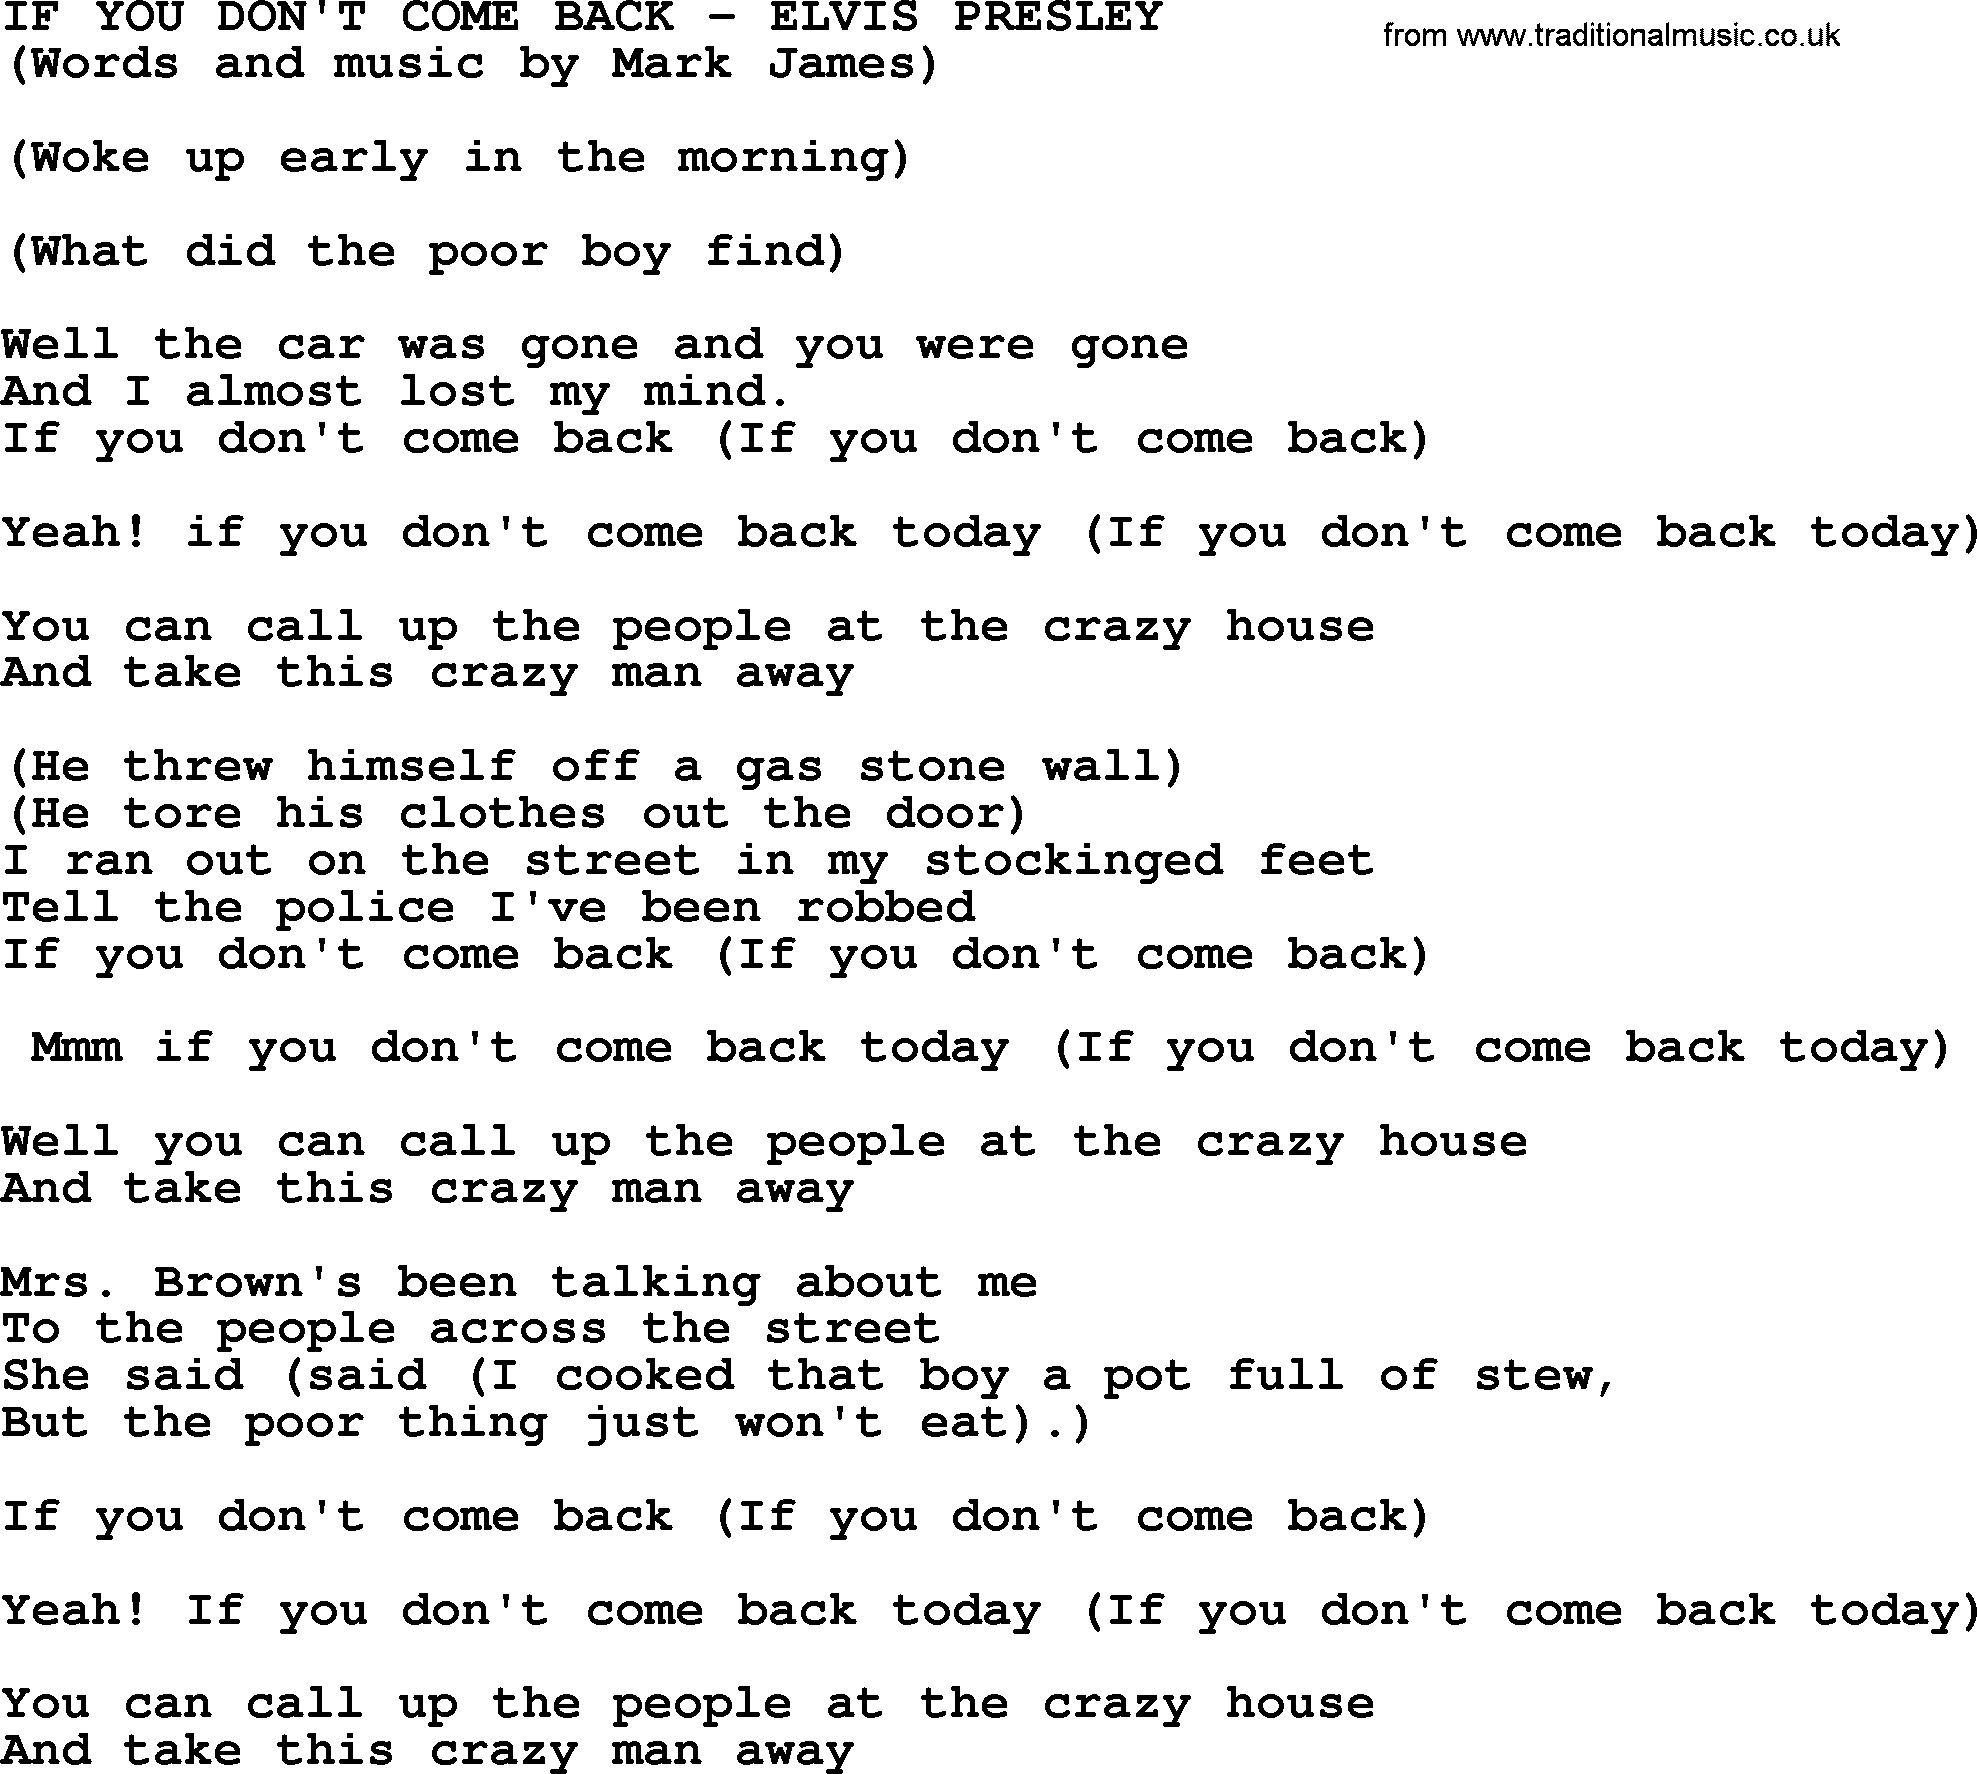 Elvis Presley song: If You Don't Come Back lyrics